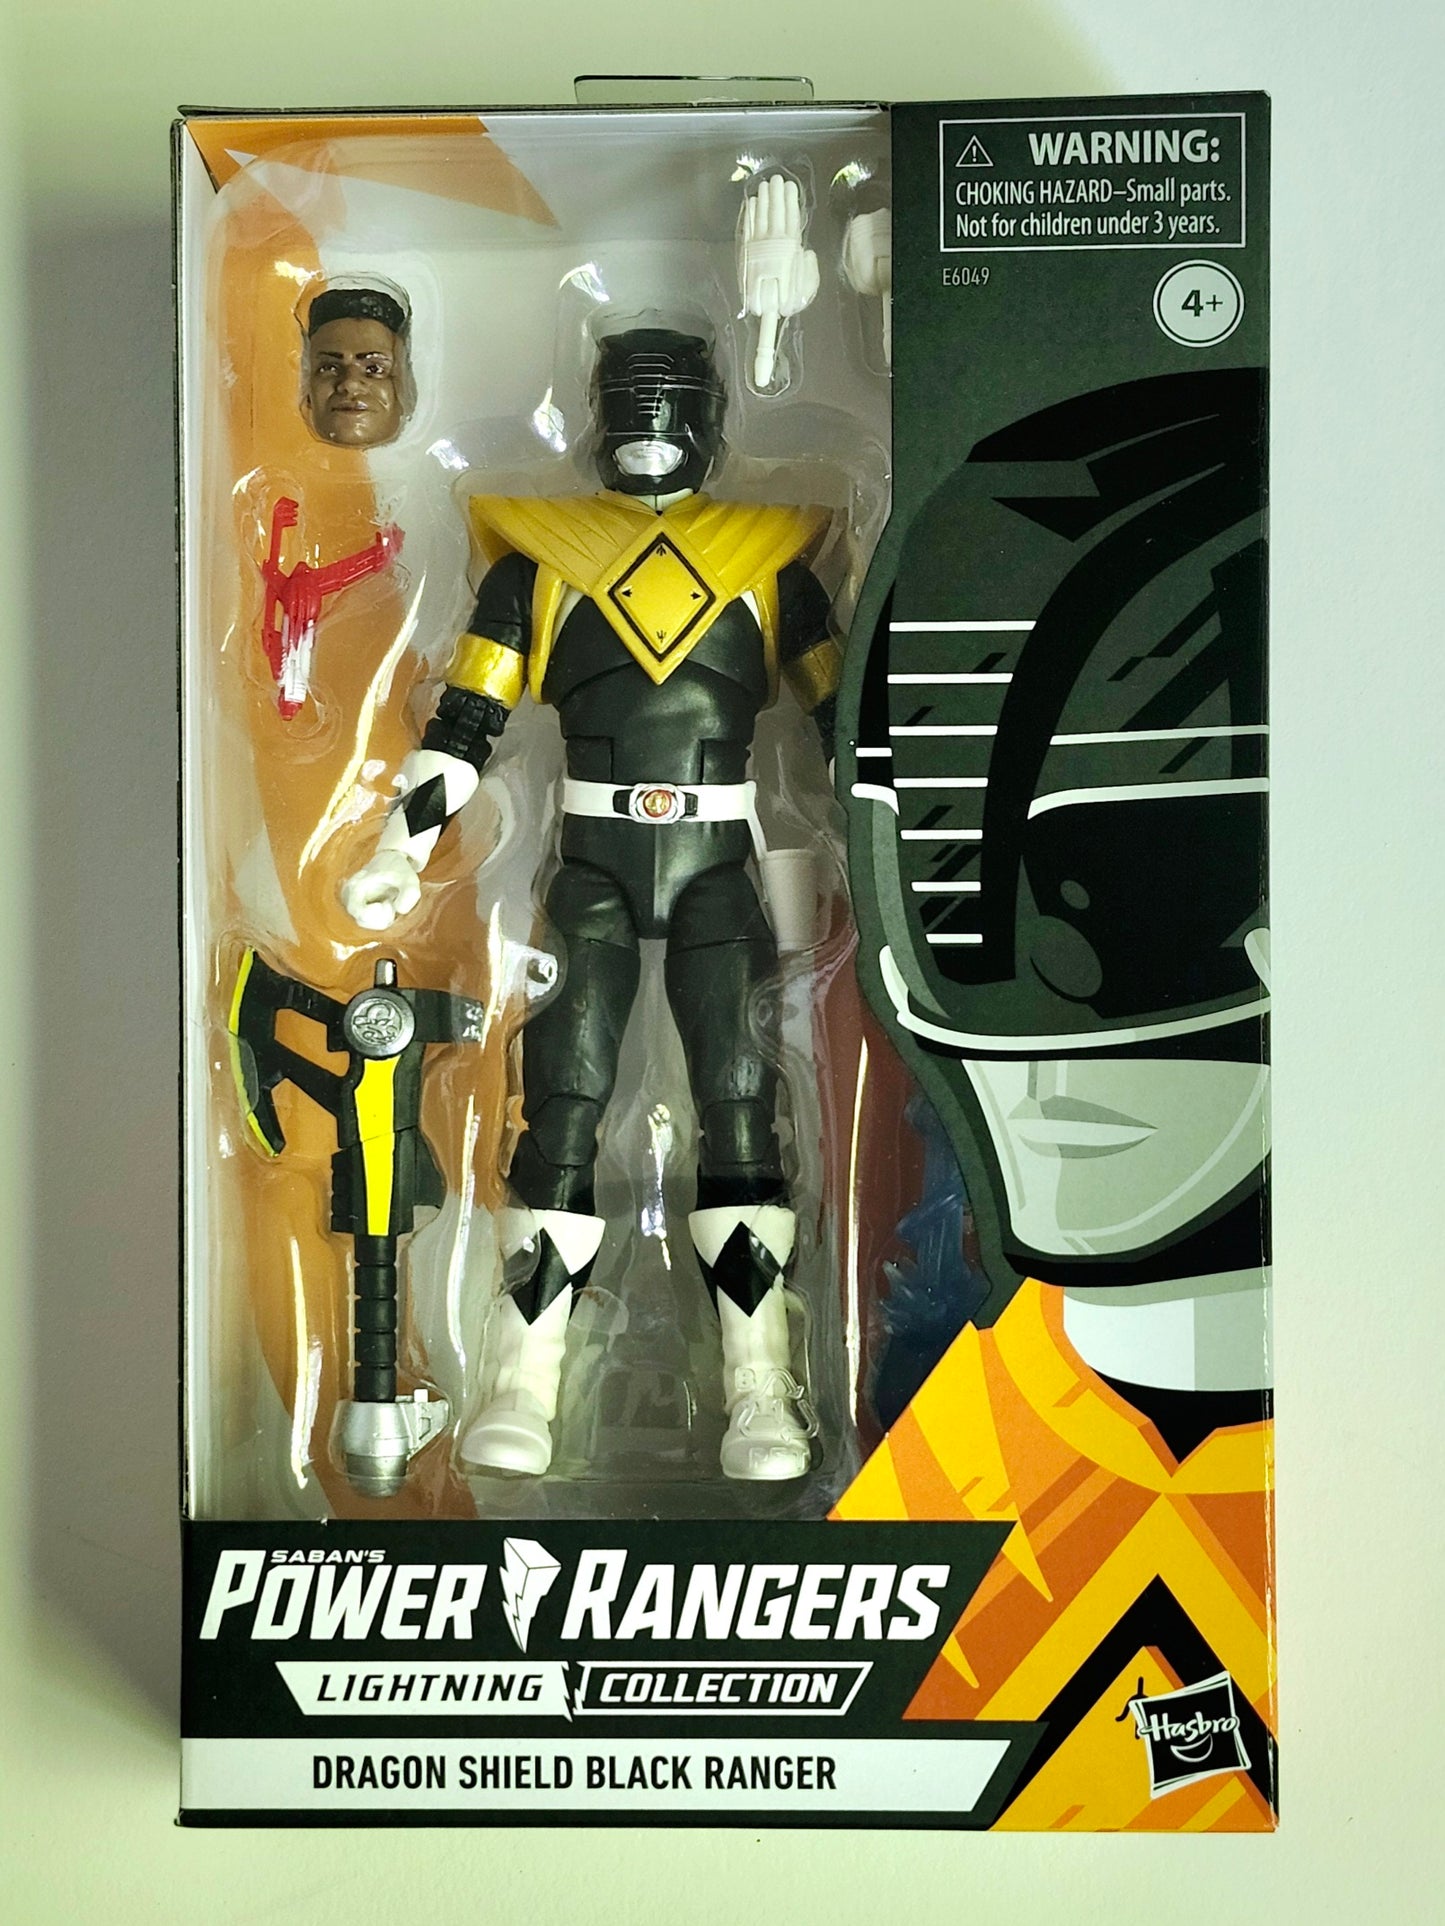 Power Rangers Lightning Collection Dragon Shield Black Ranger 6-Inch Action Figure